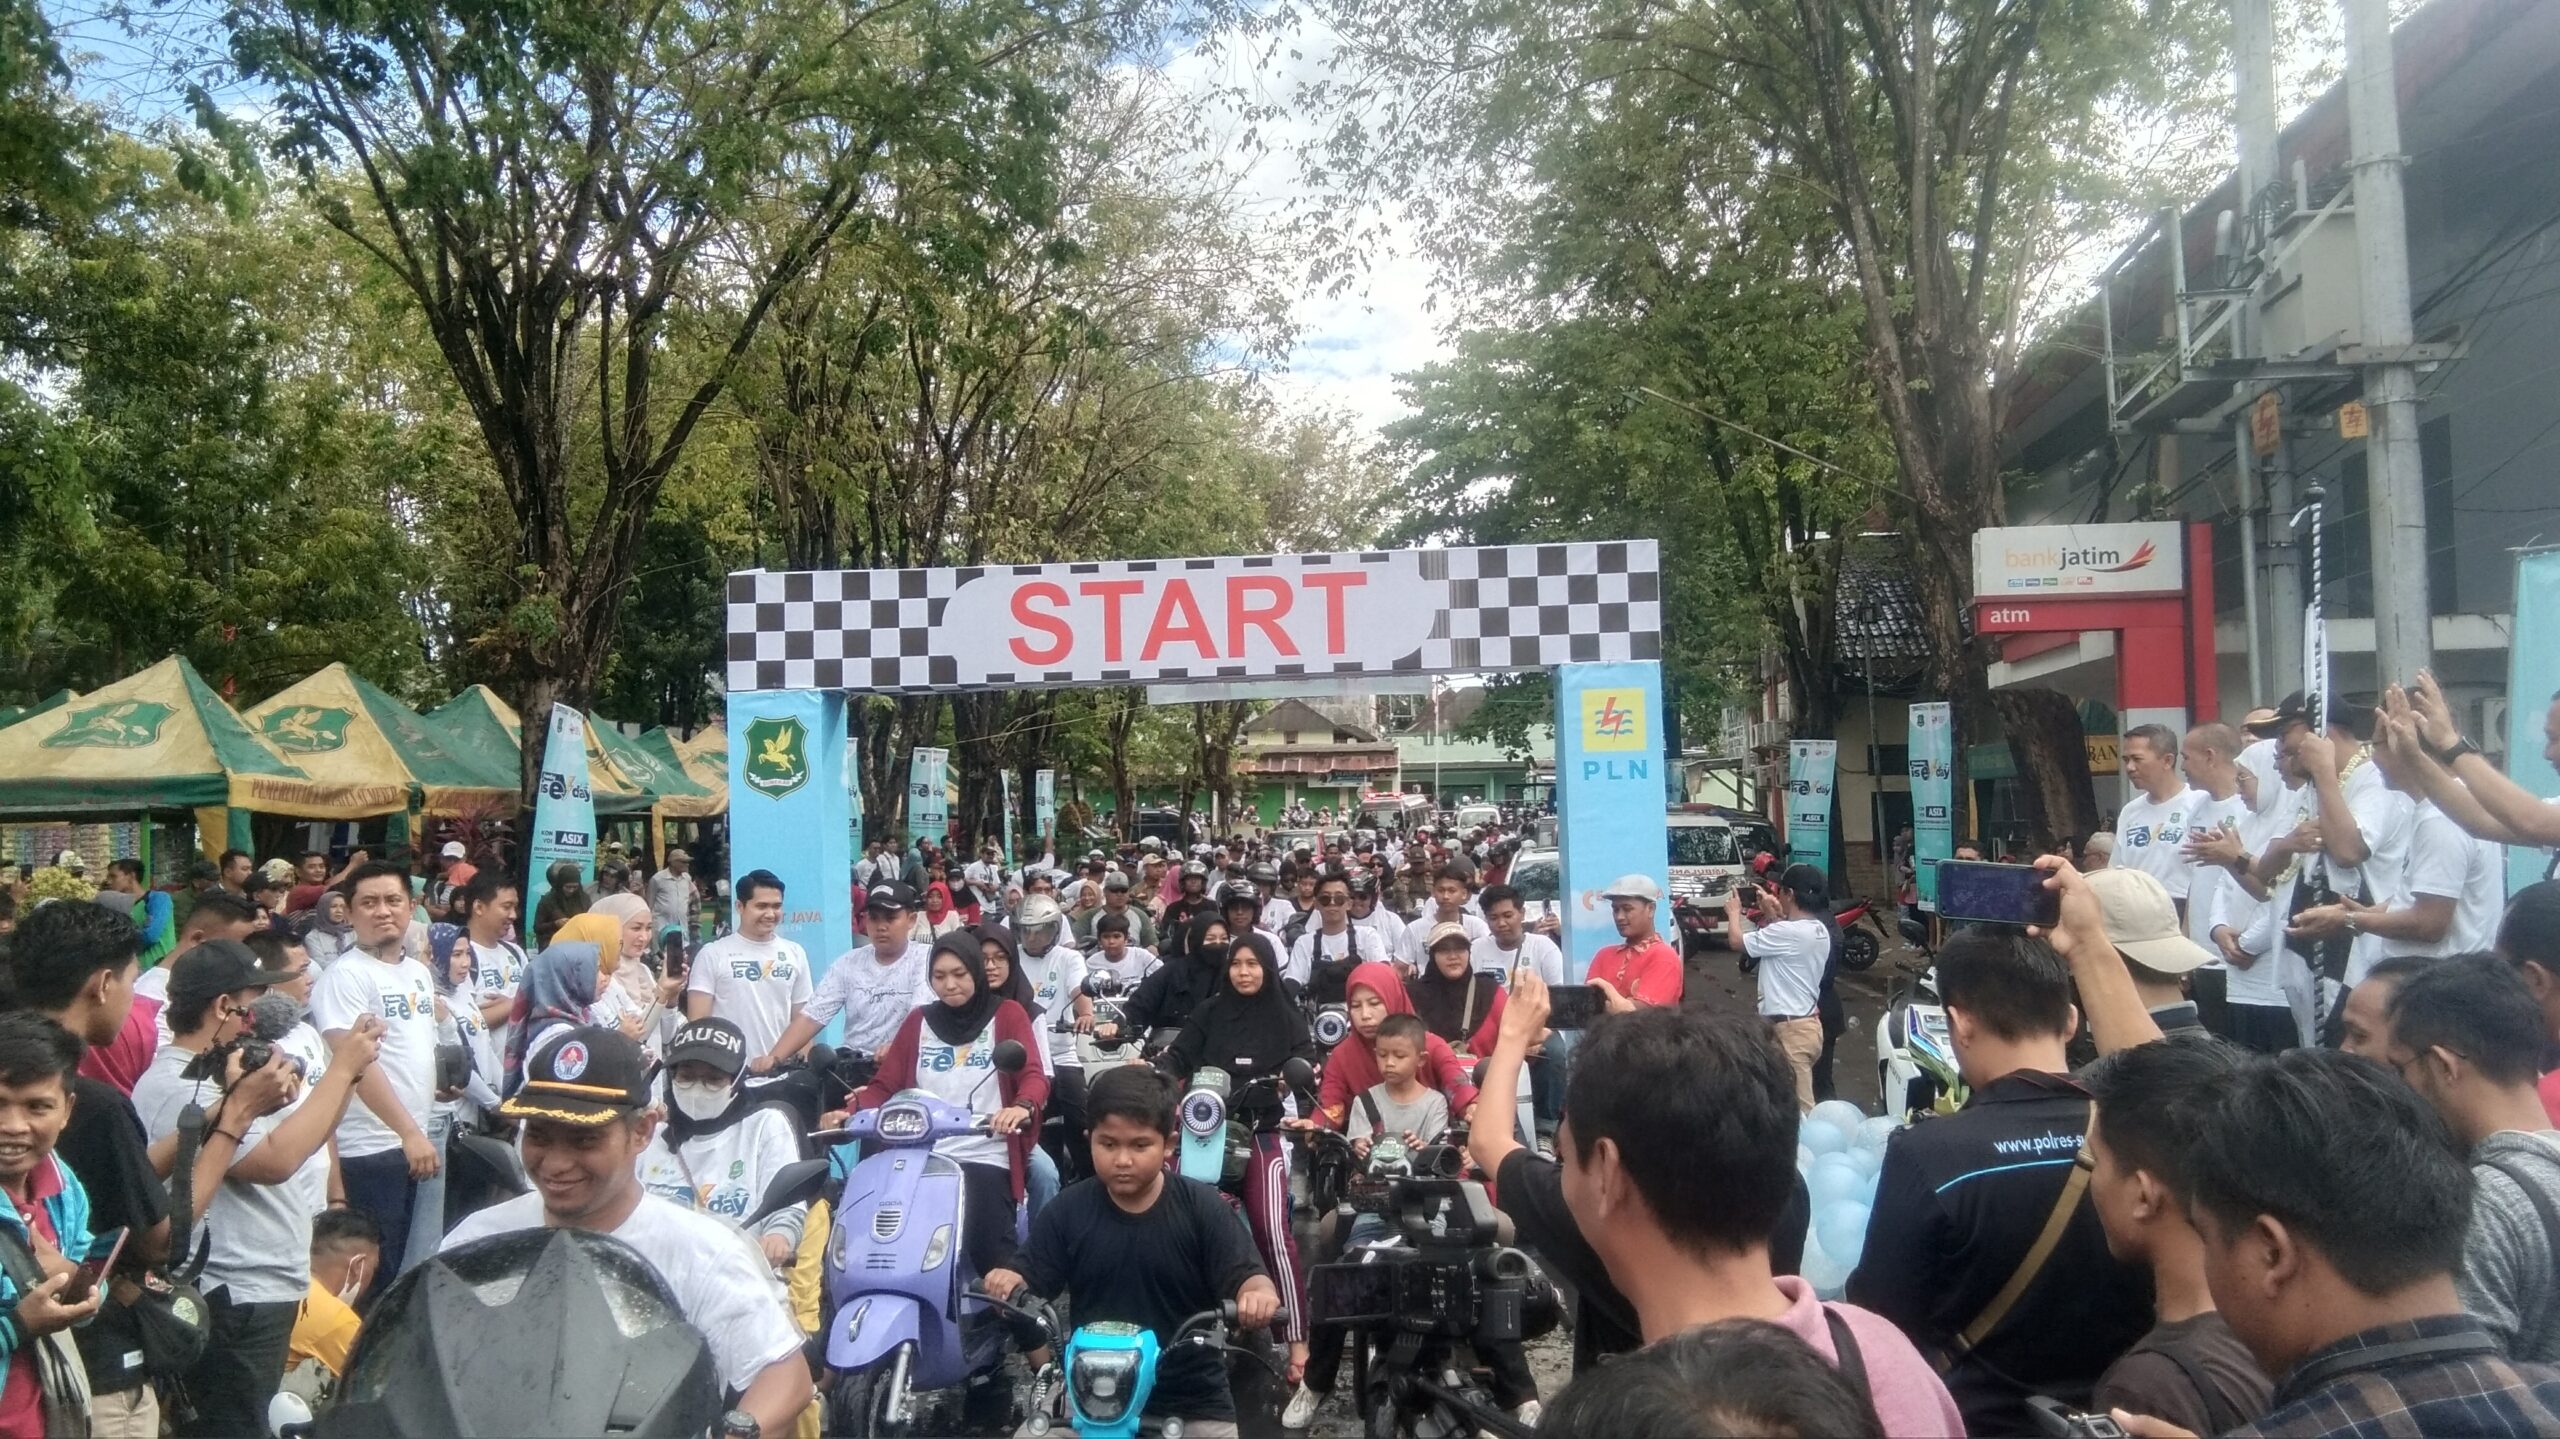 Gandeng PLN, Pemkab Sumenep Gelar Konvoi Sepeda Listrik Keliling Jantung Kota